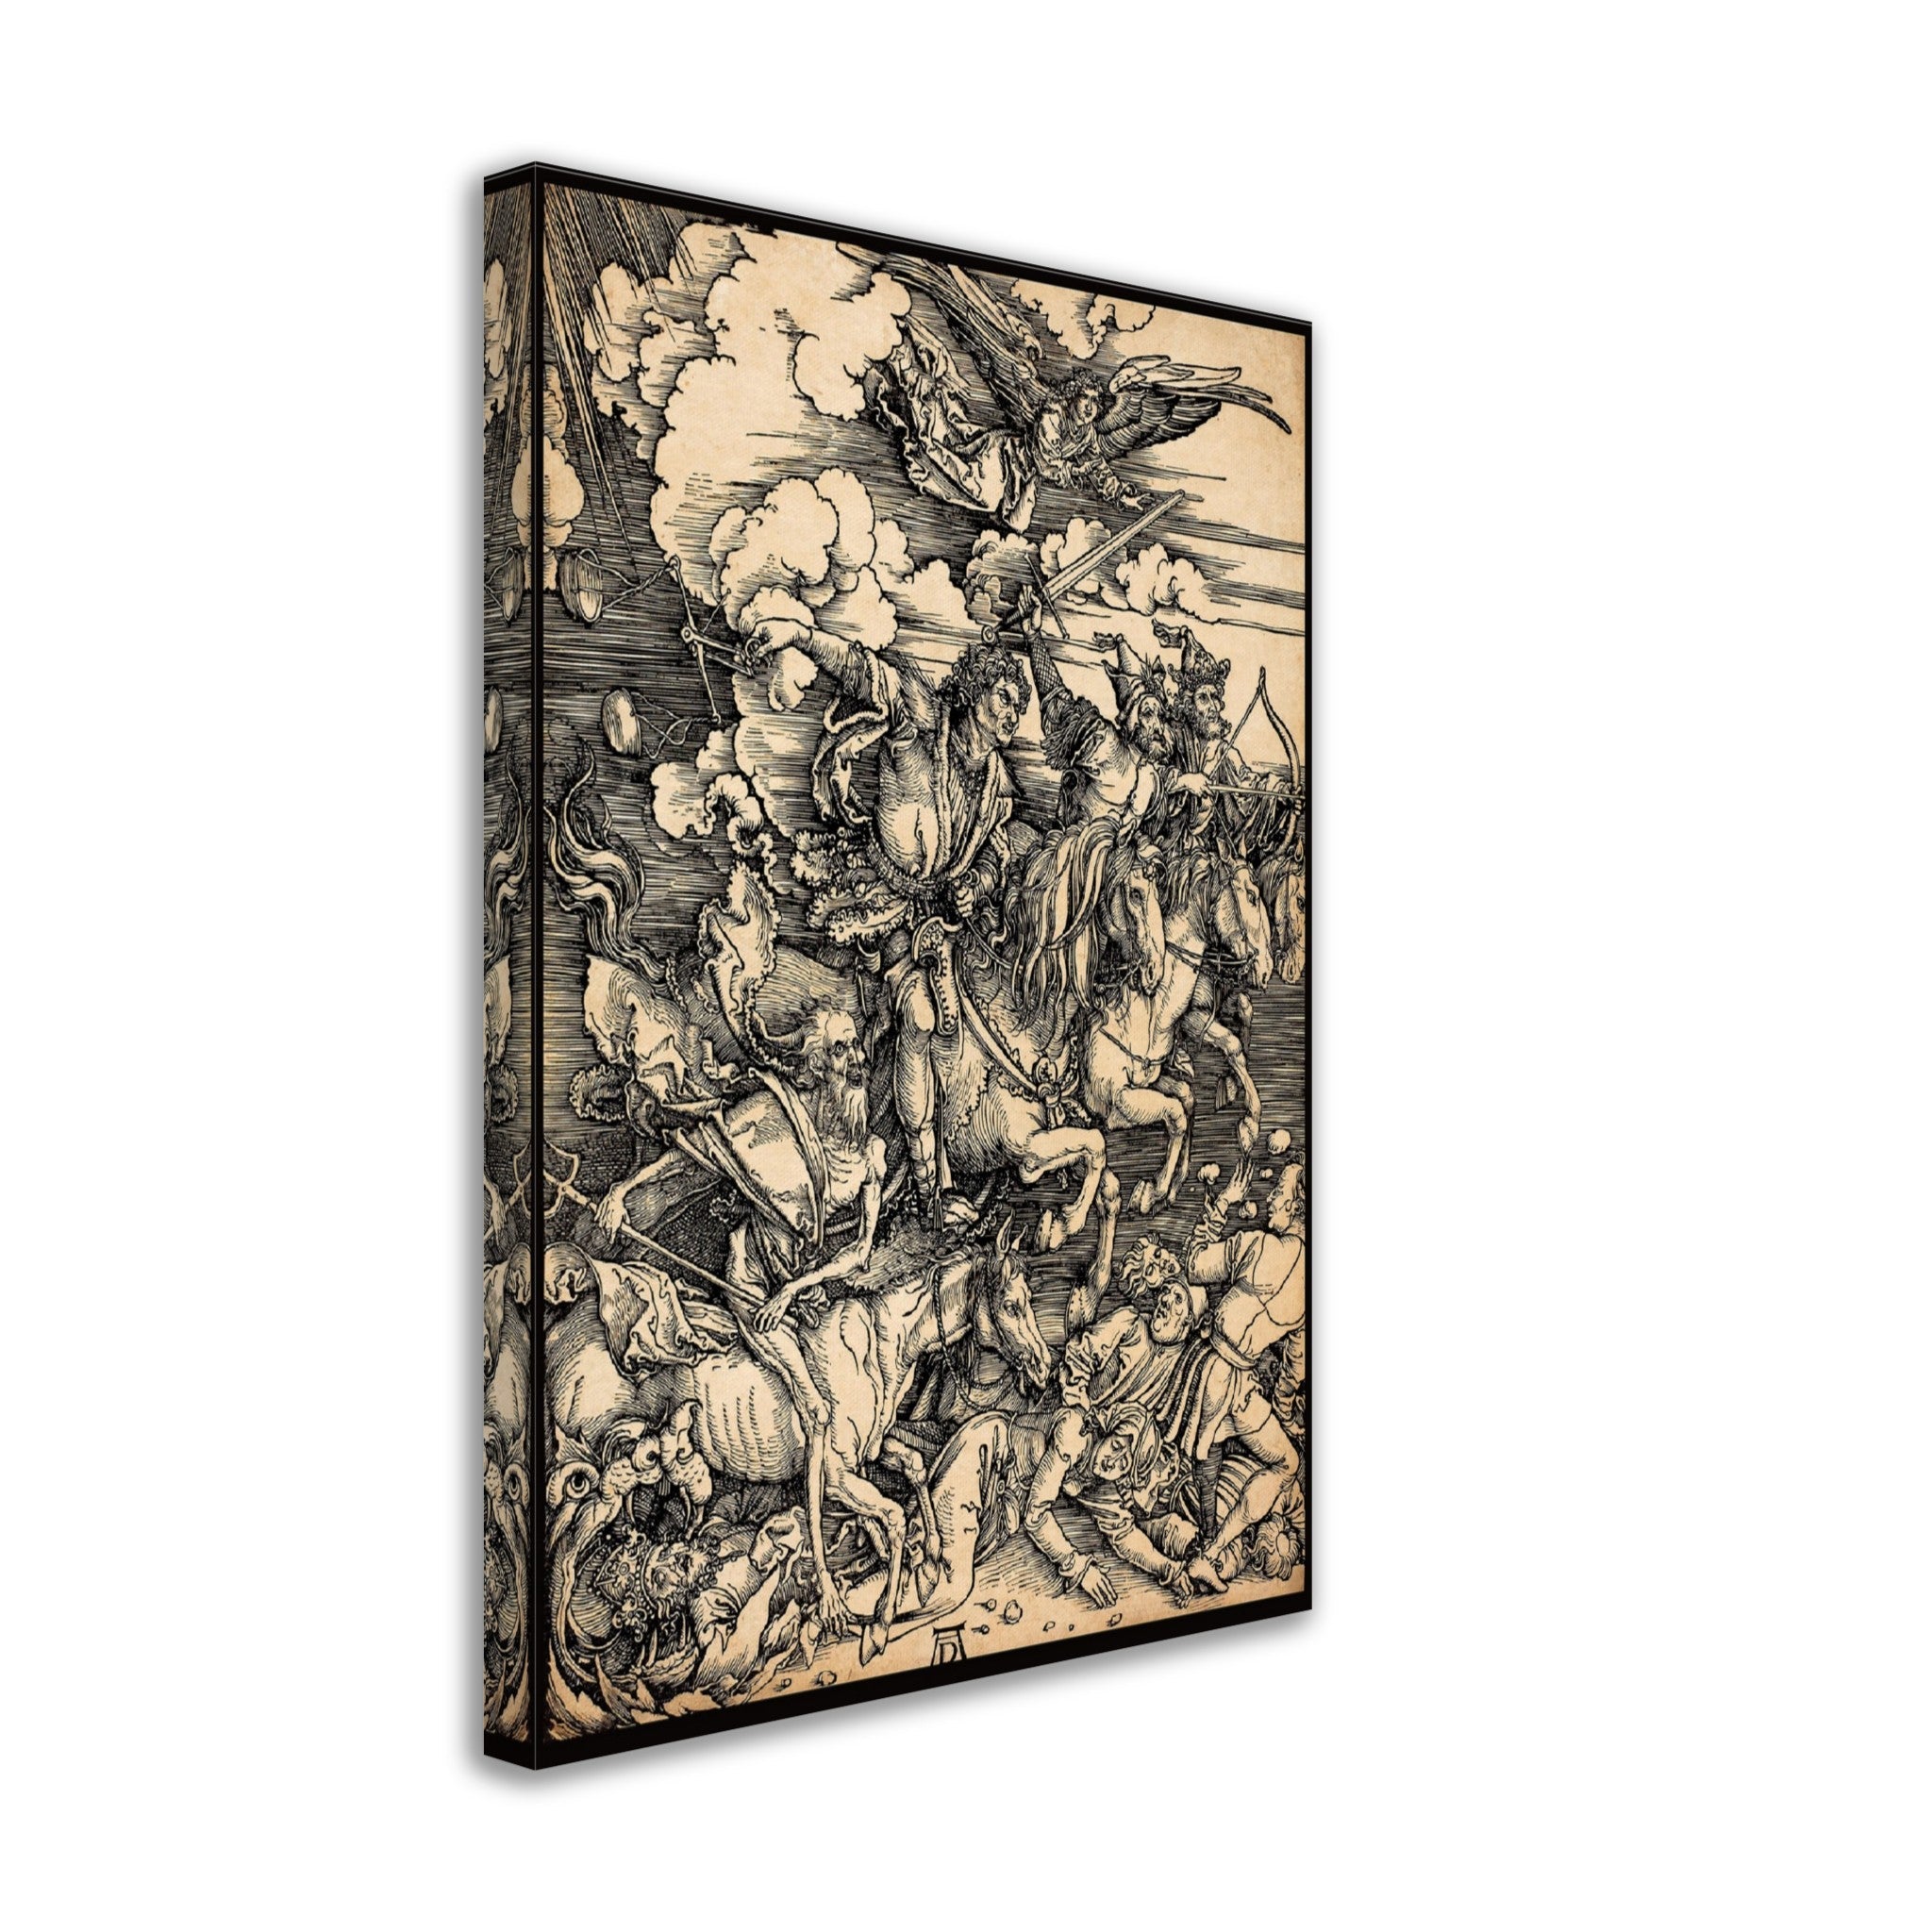 Four Horsemen Canvas - Albrecht Durer Canvas - Four Horsemen Of The Apocalypse - WallArtPrints4U